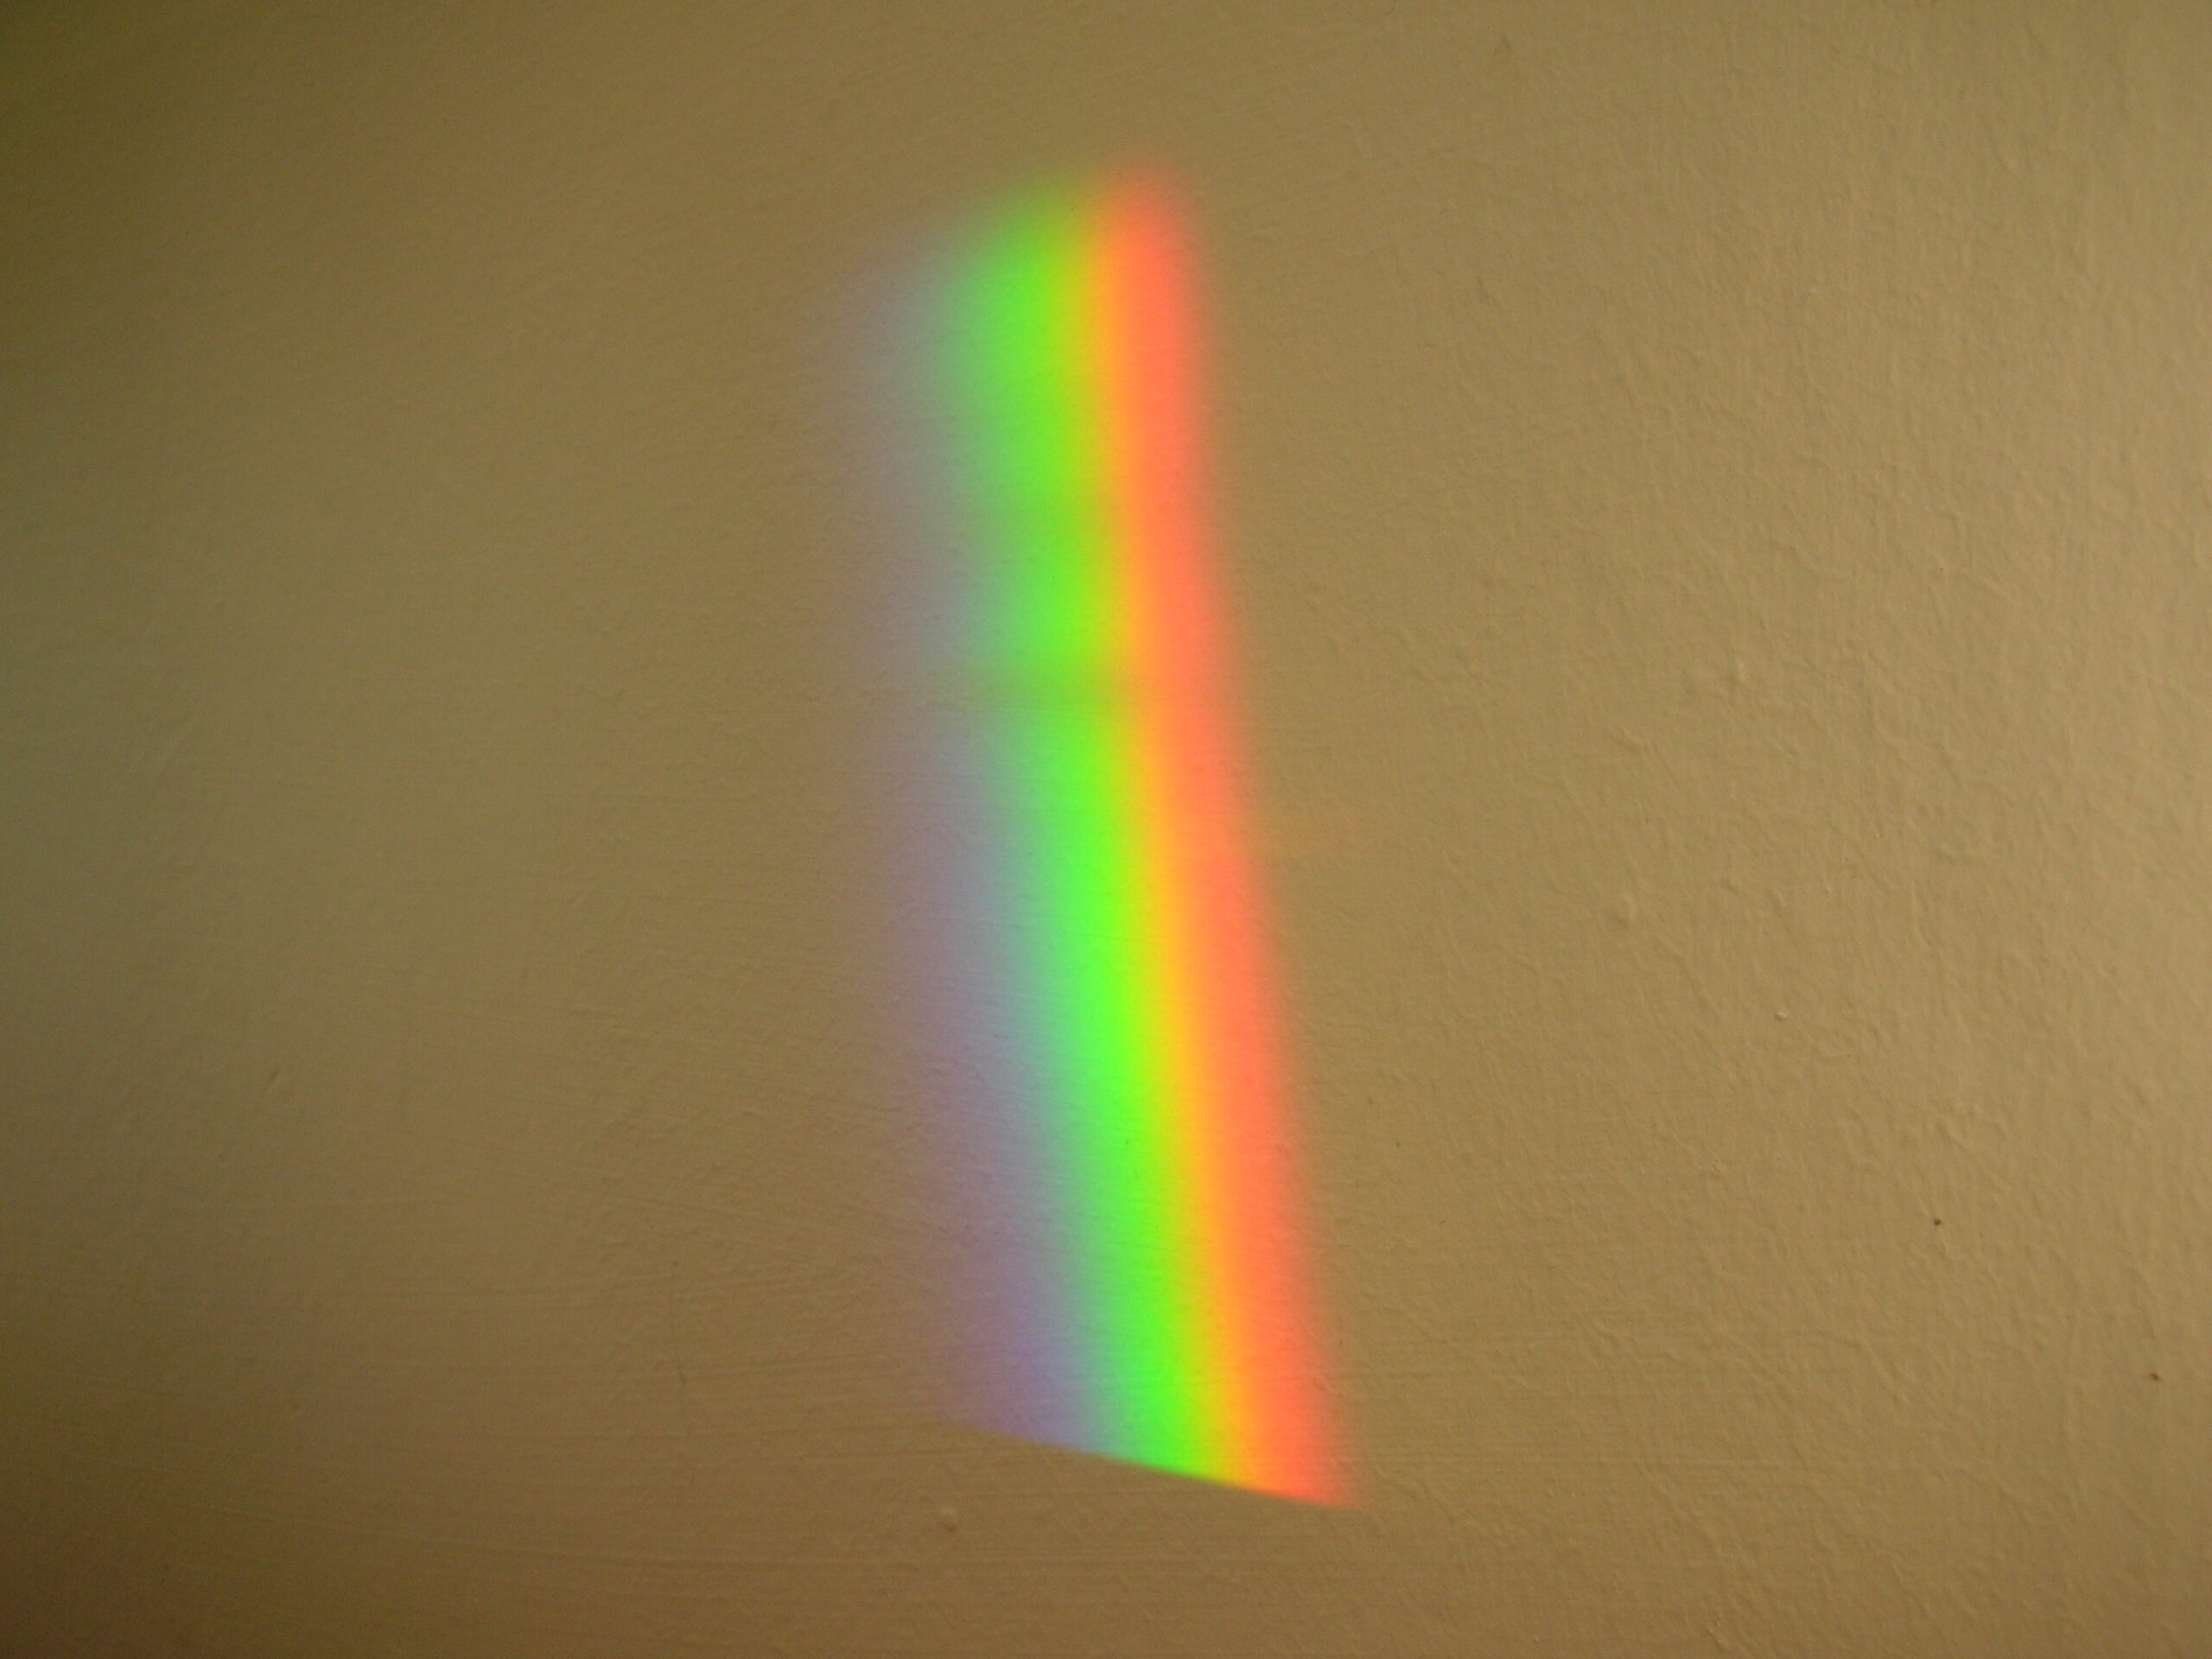 Spektralanalyse